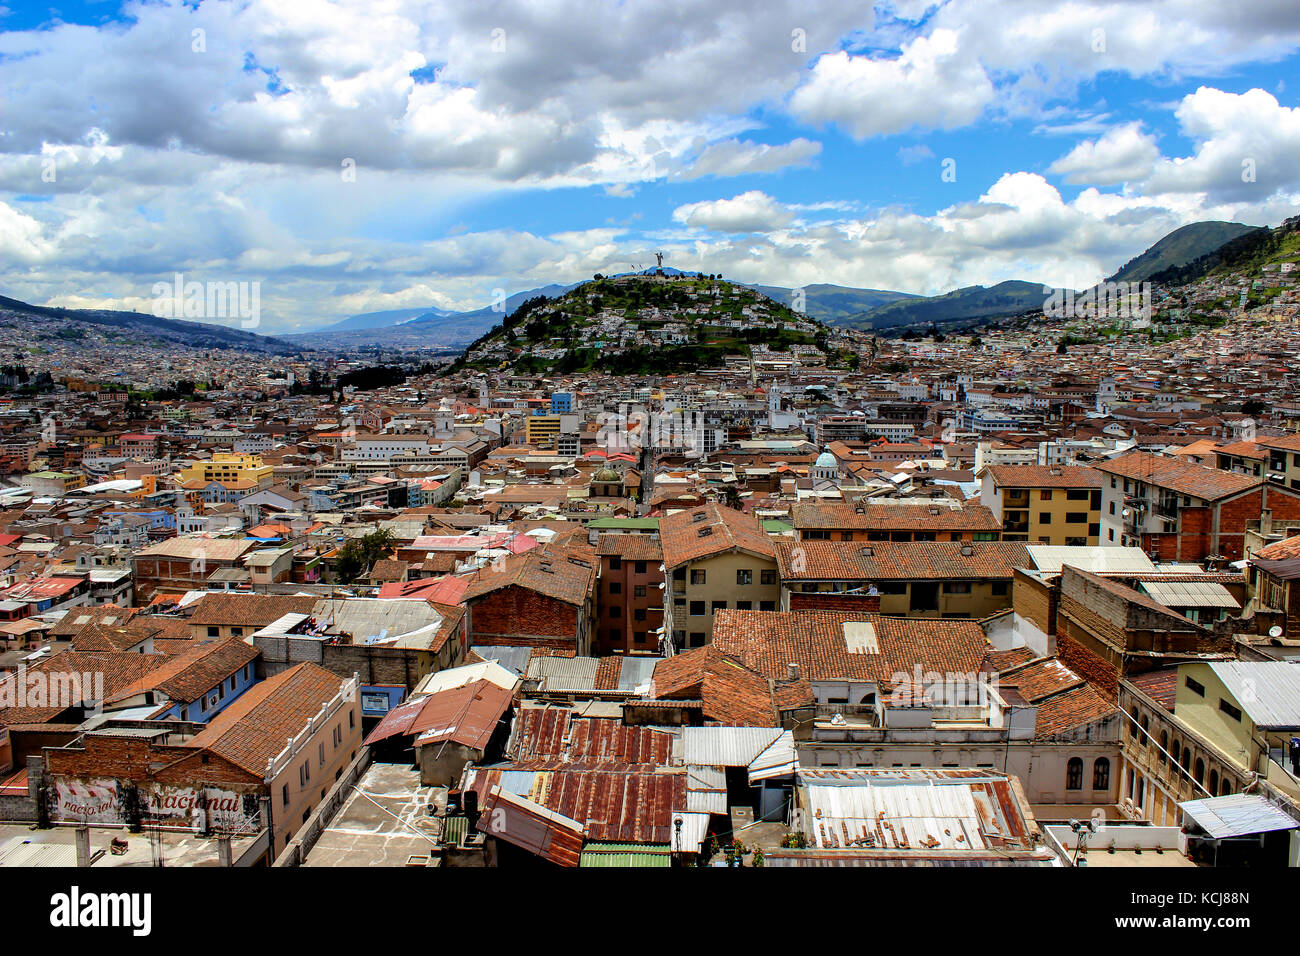 El panecillo, panorama of Quito, Ecuador Stock Photo